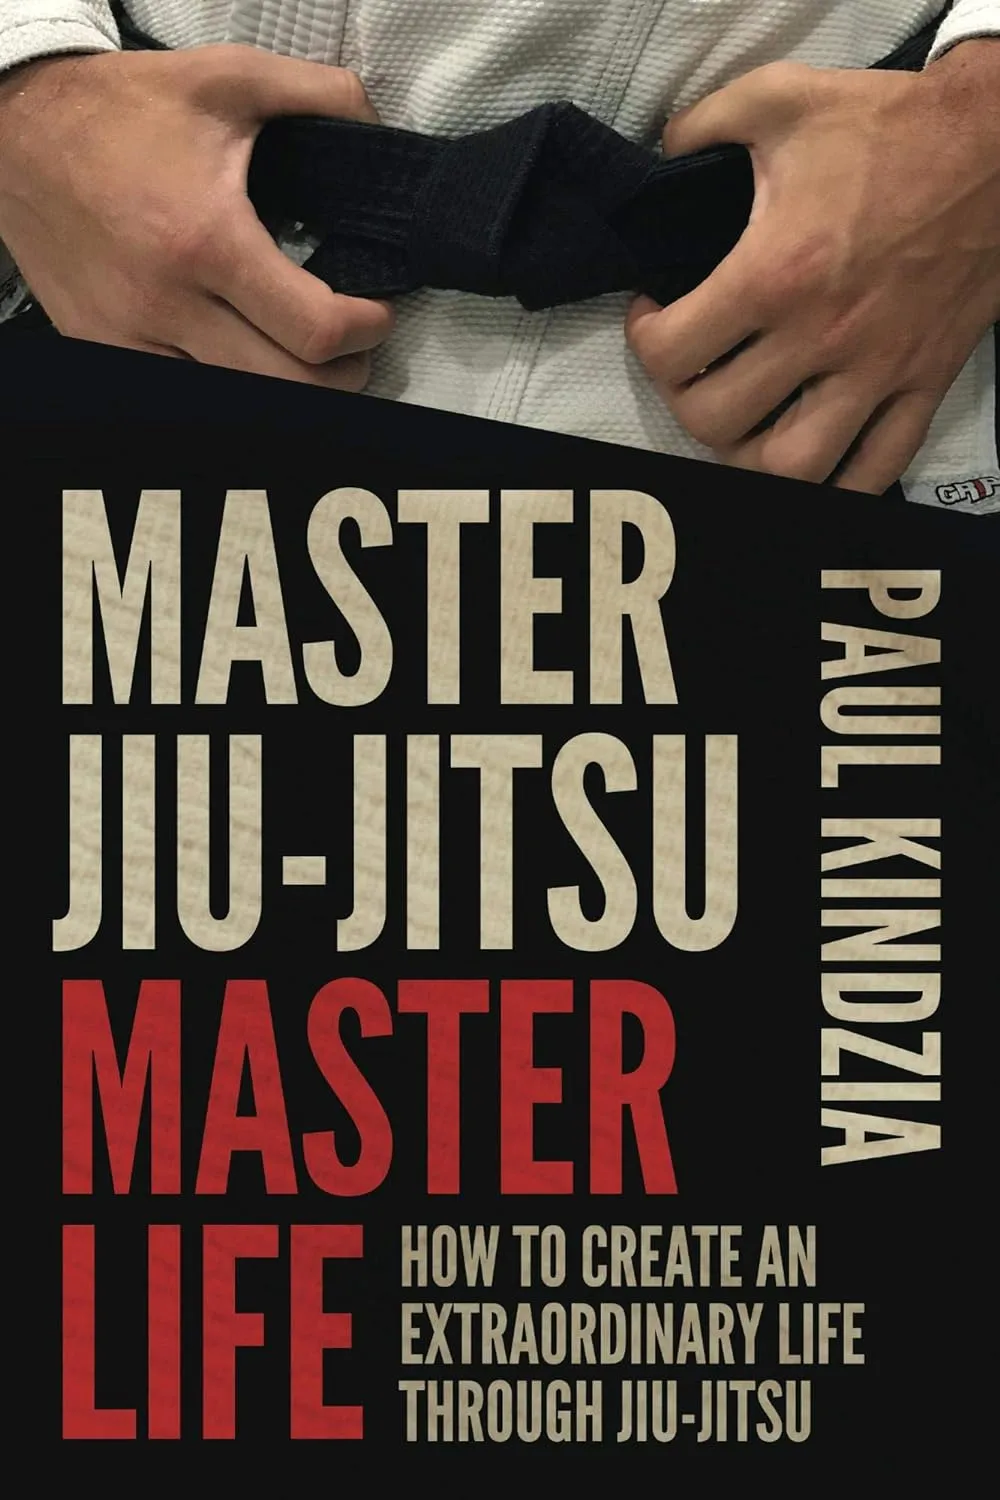 
Master Jiu-Jitsu Master Life: How To Create An Extraordinary Life Through Jiu-Jitsu